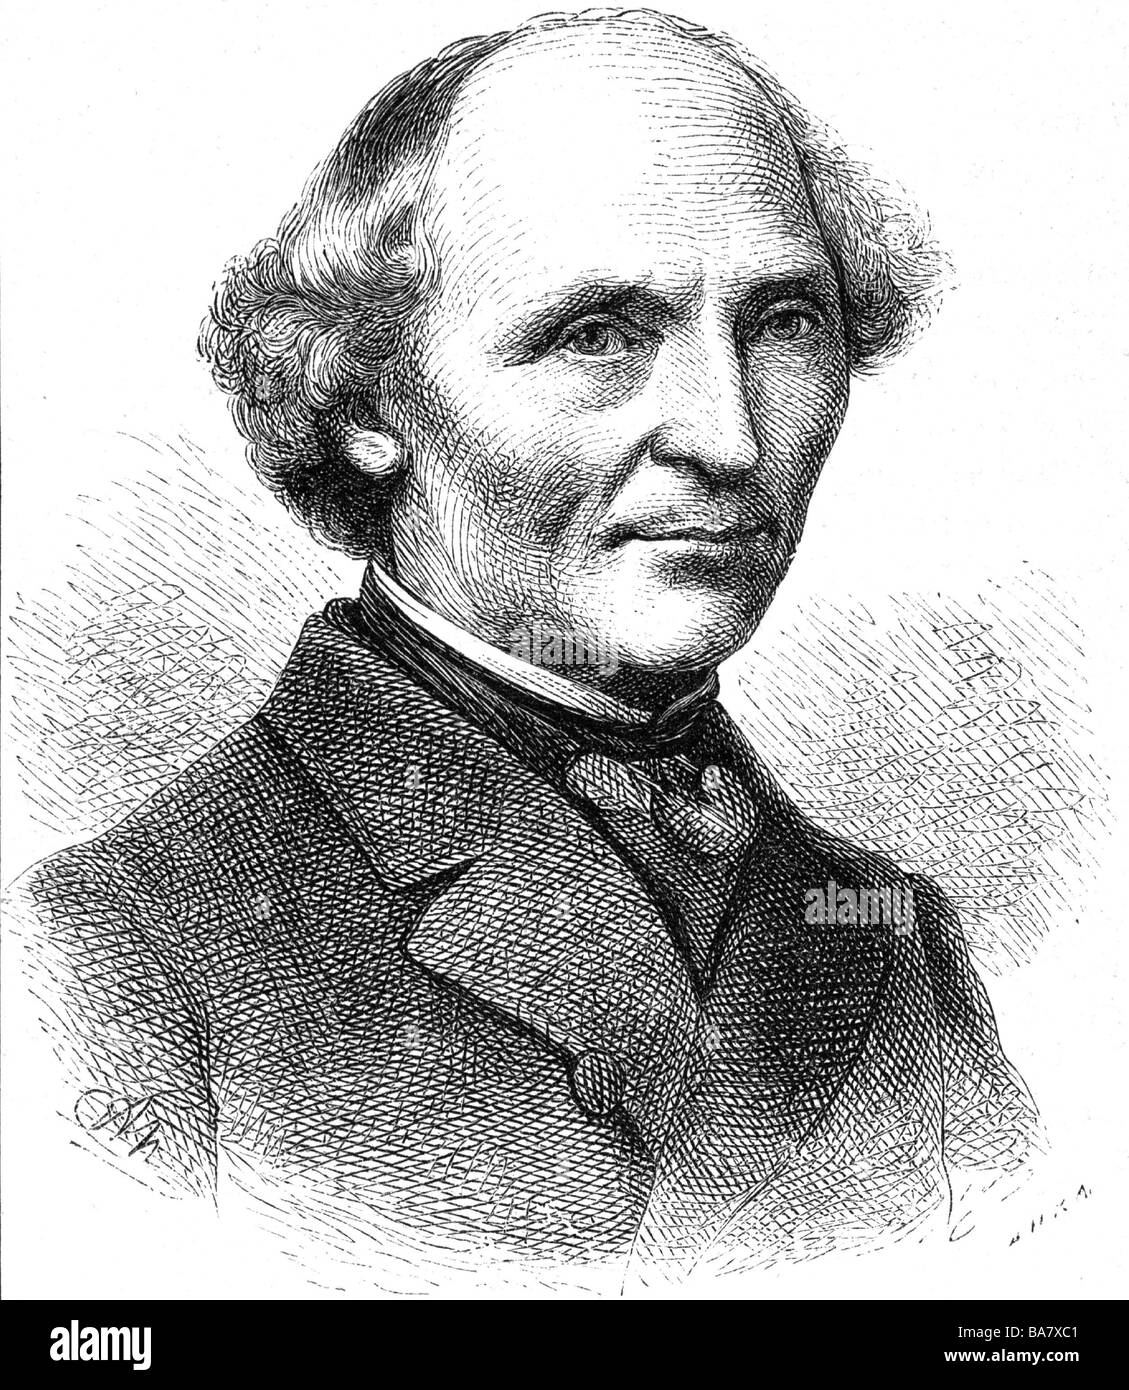 Stueler, Friedrich August, 28.1.1800 - 18.3.1865, German architect, portrait, wood engraving, late 19th century, Stock Photo